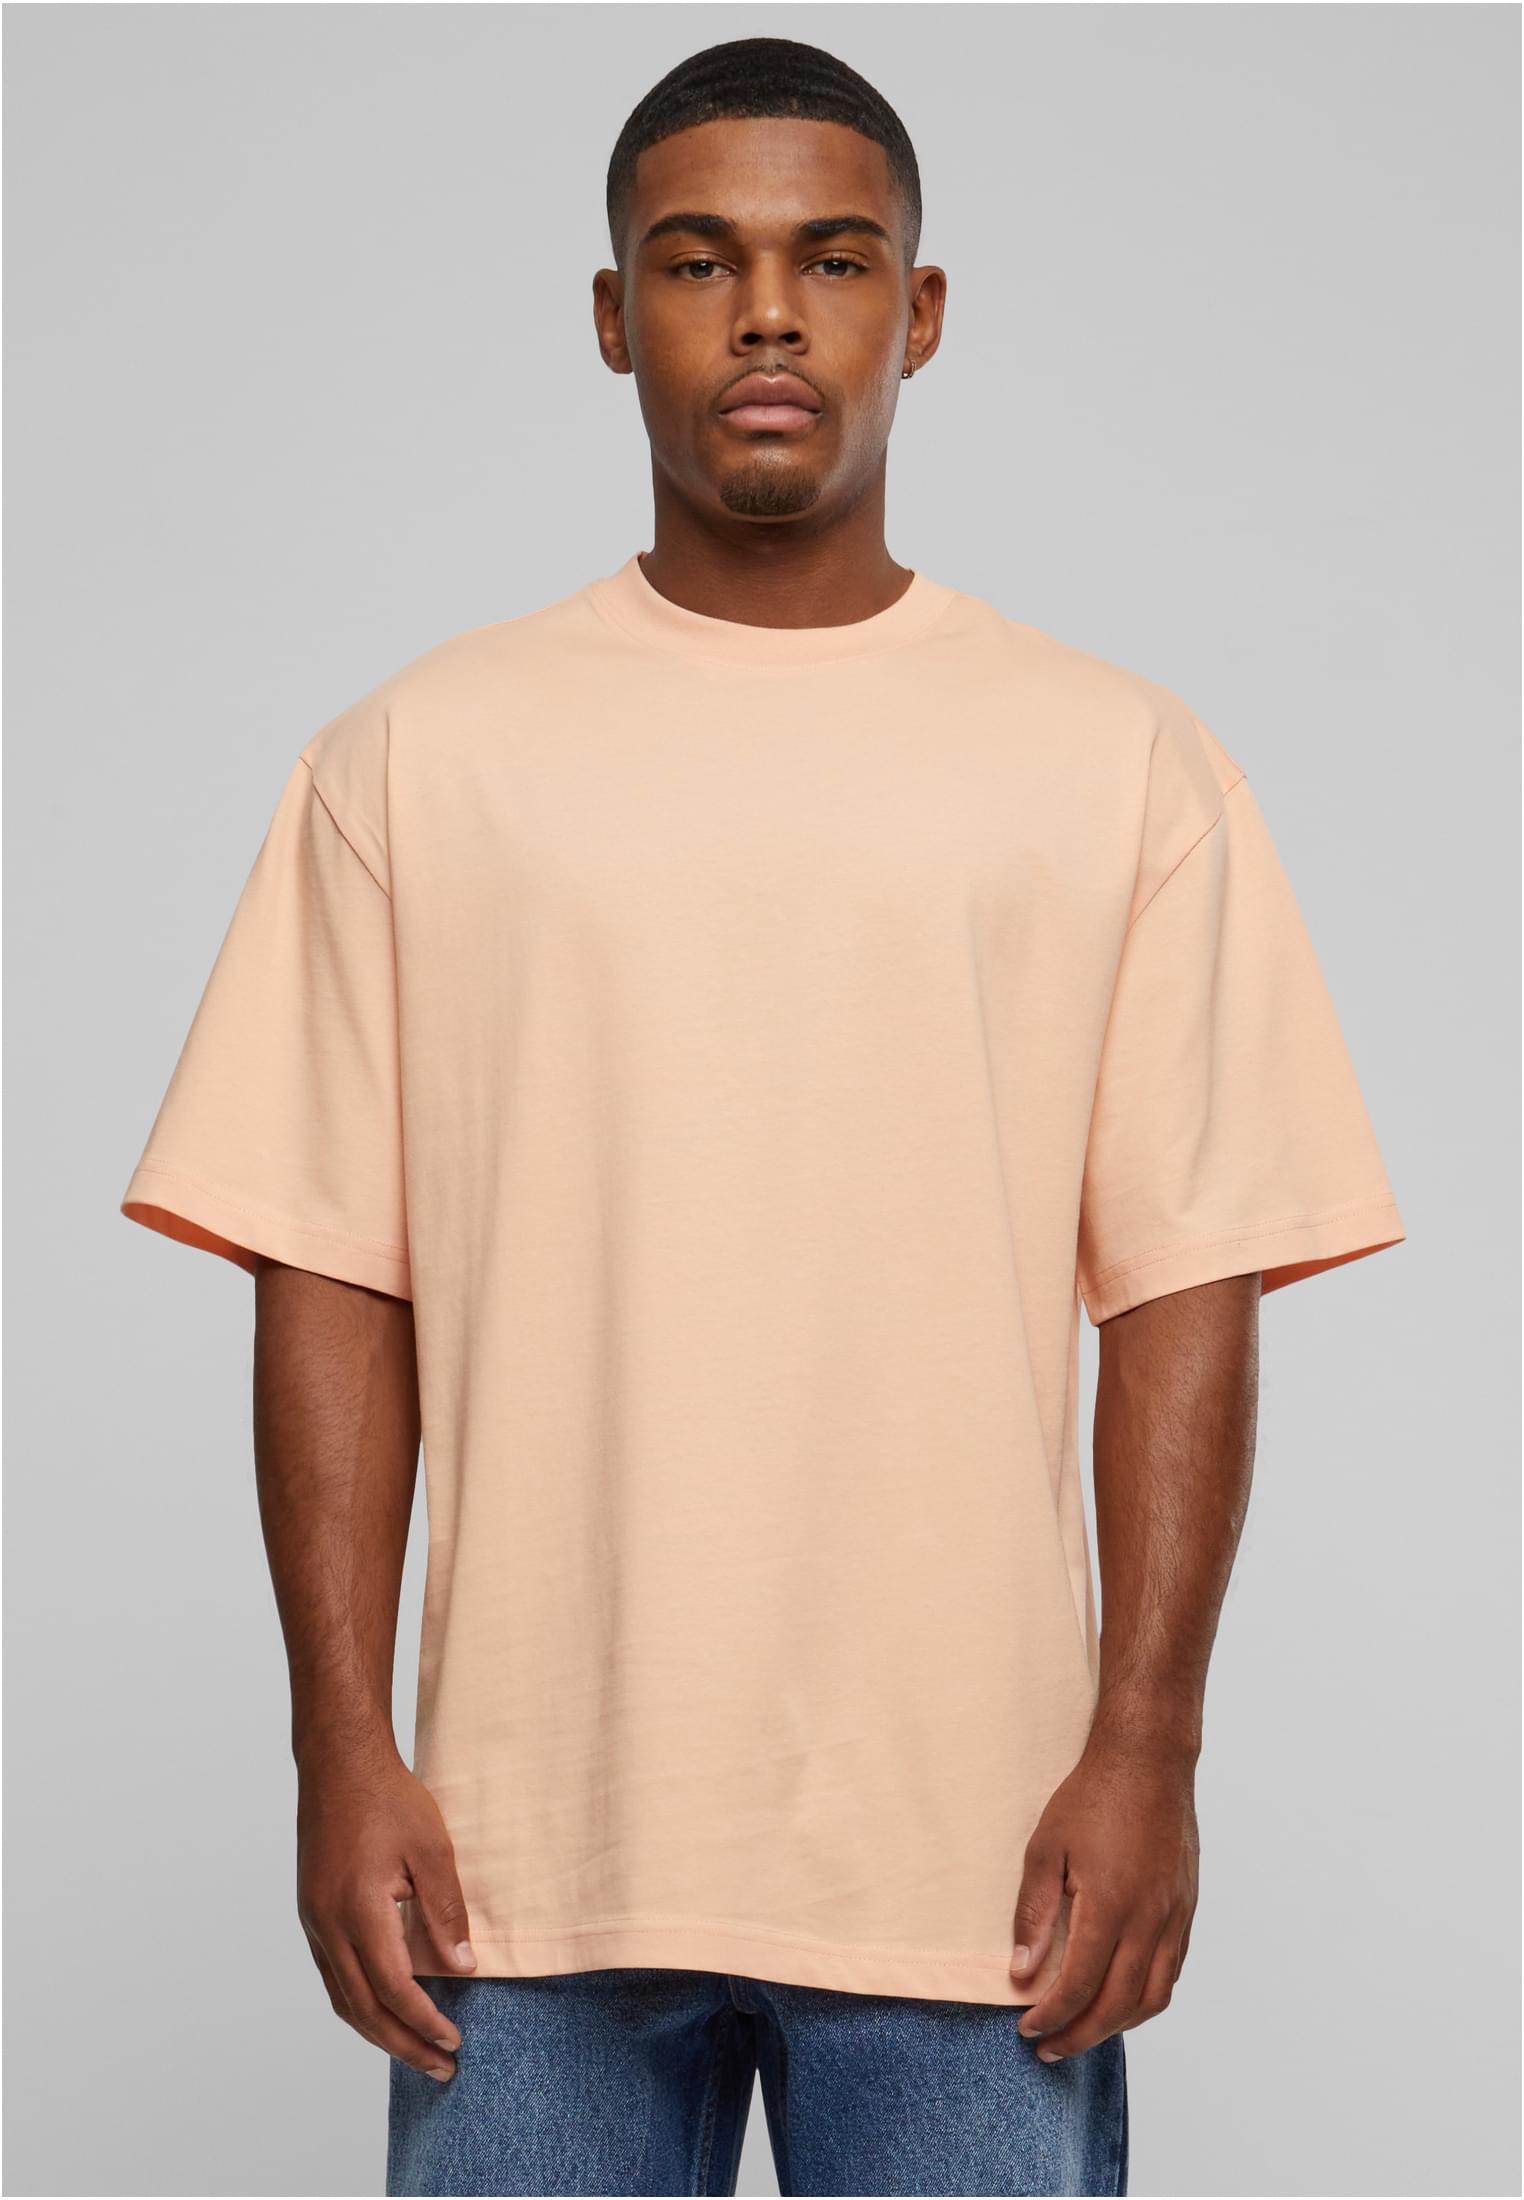 Men's T-shirt Tall Tee - apricot